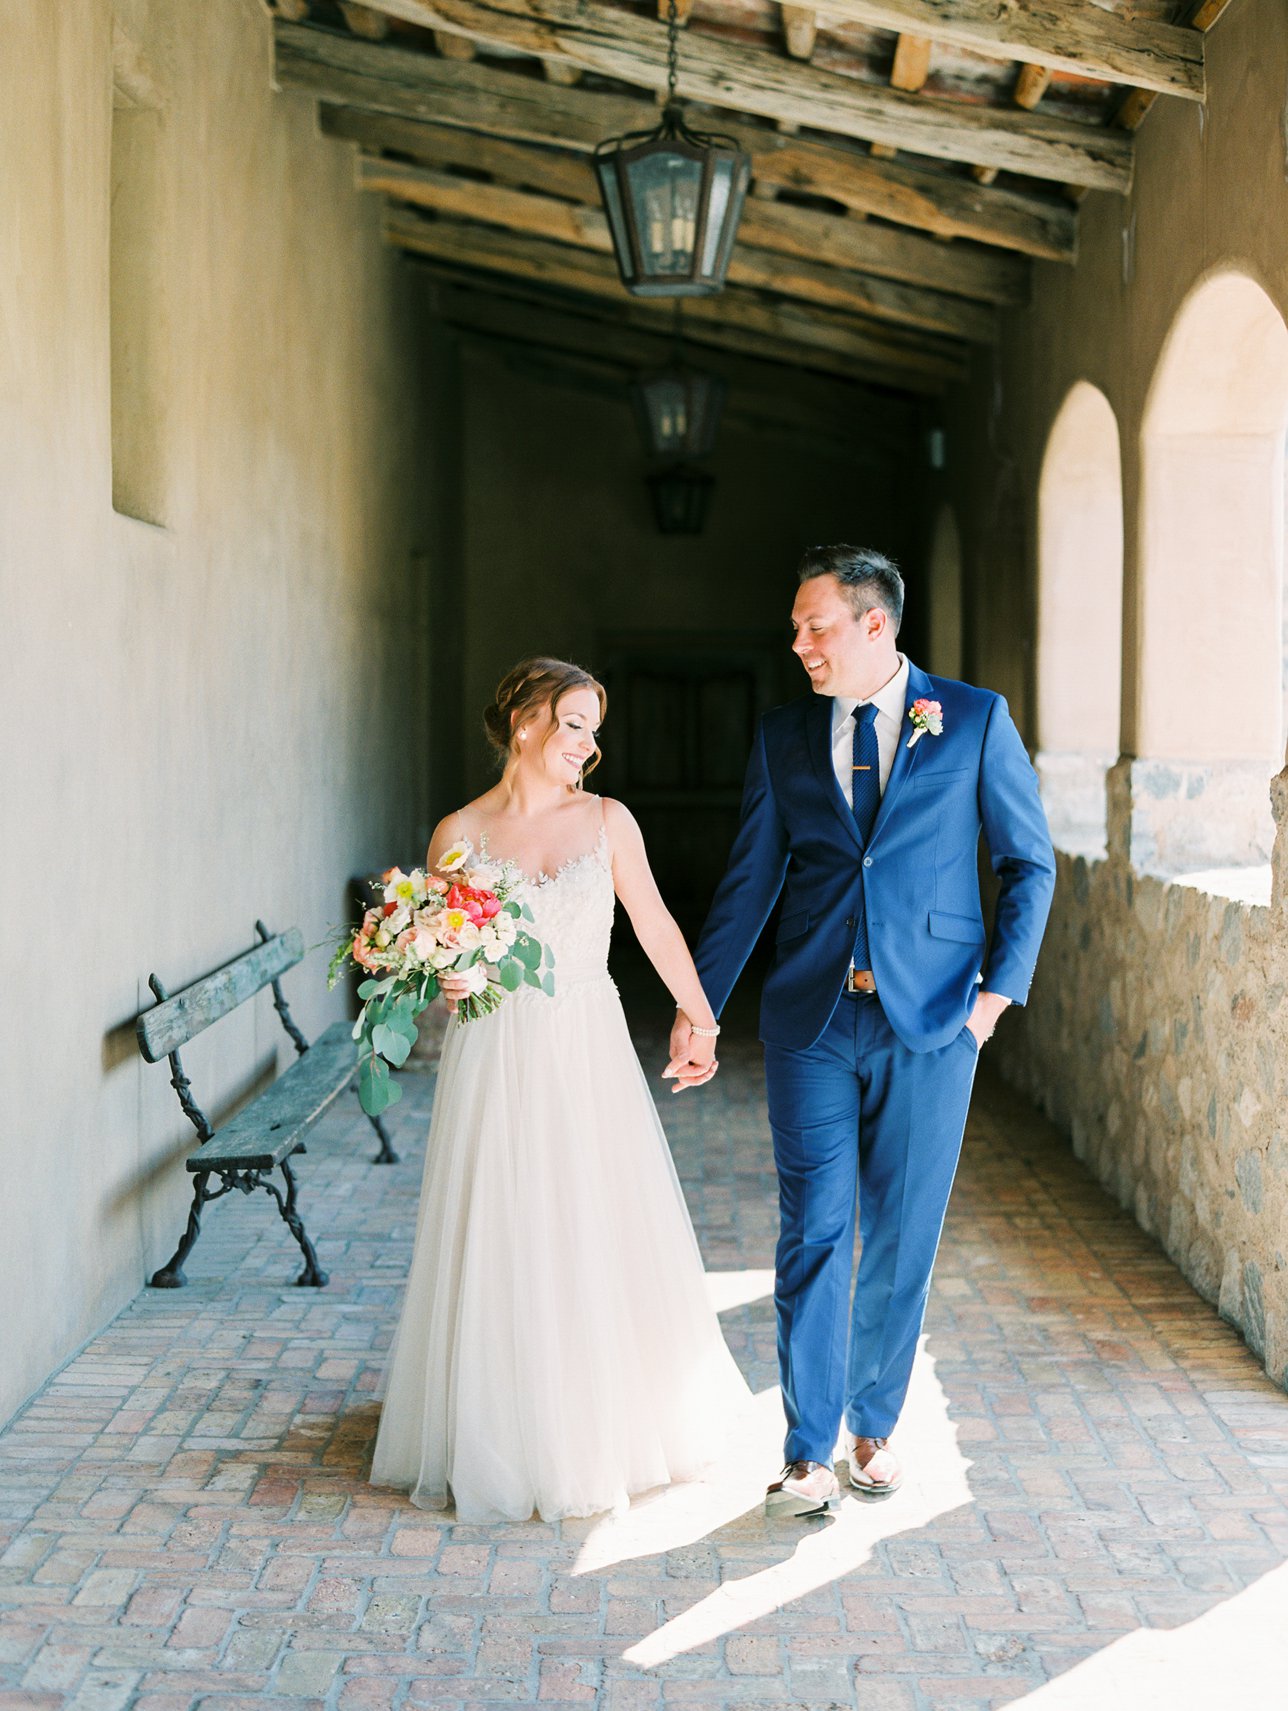 Silverleaf wedding photos - Scottsdale wedding photographer - Rachel Solomon Photography